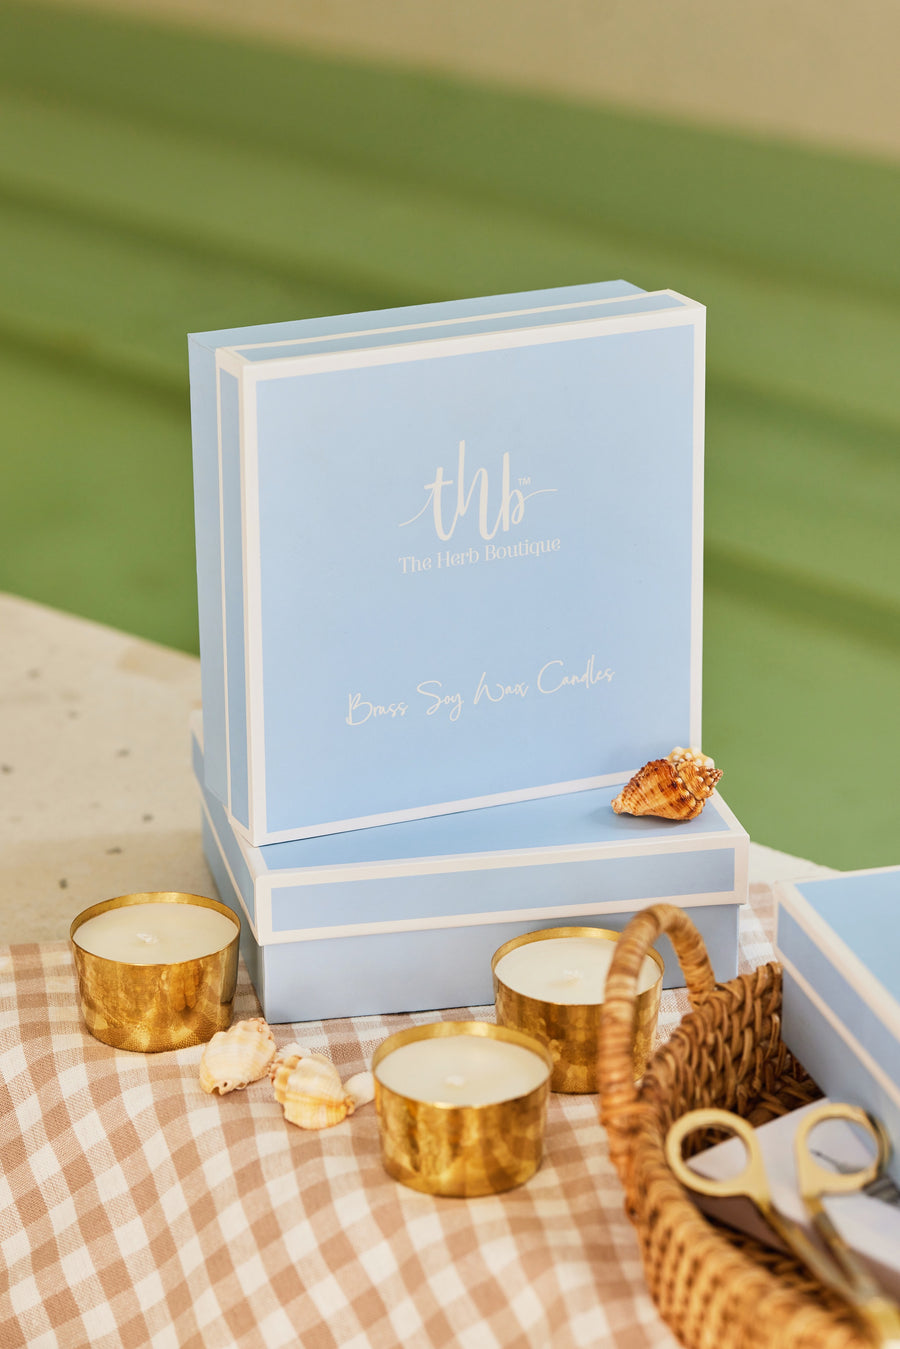 Salt & Sea Candle Gift Pack